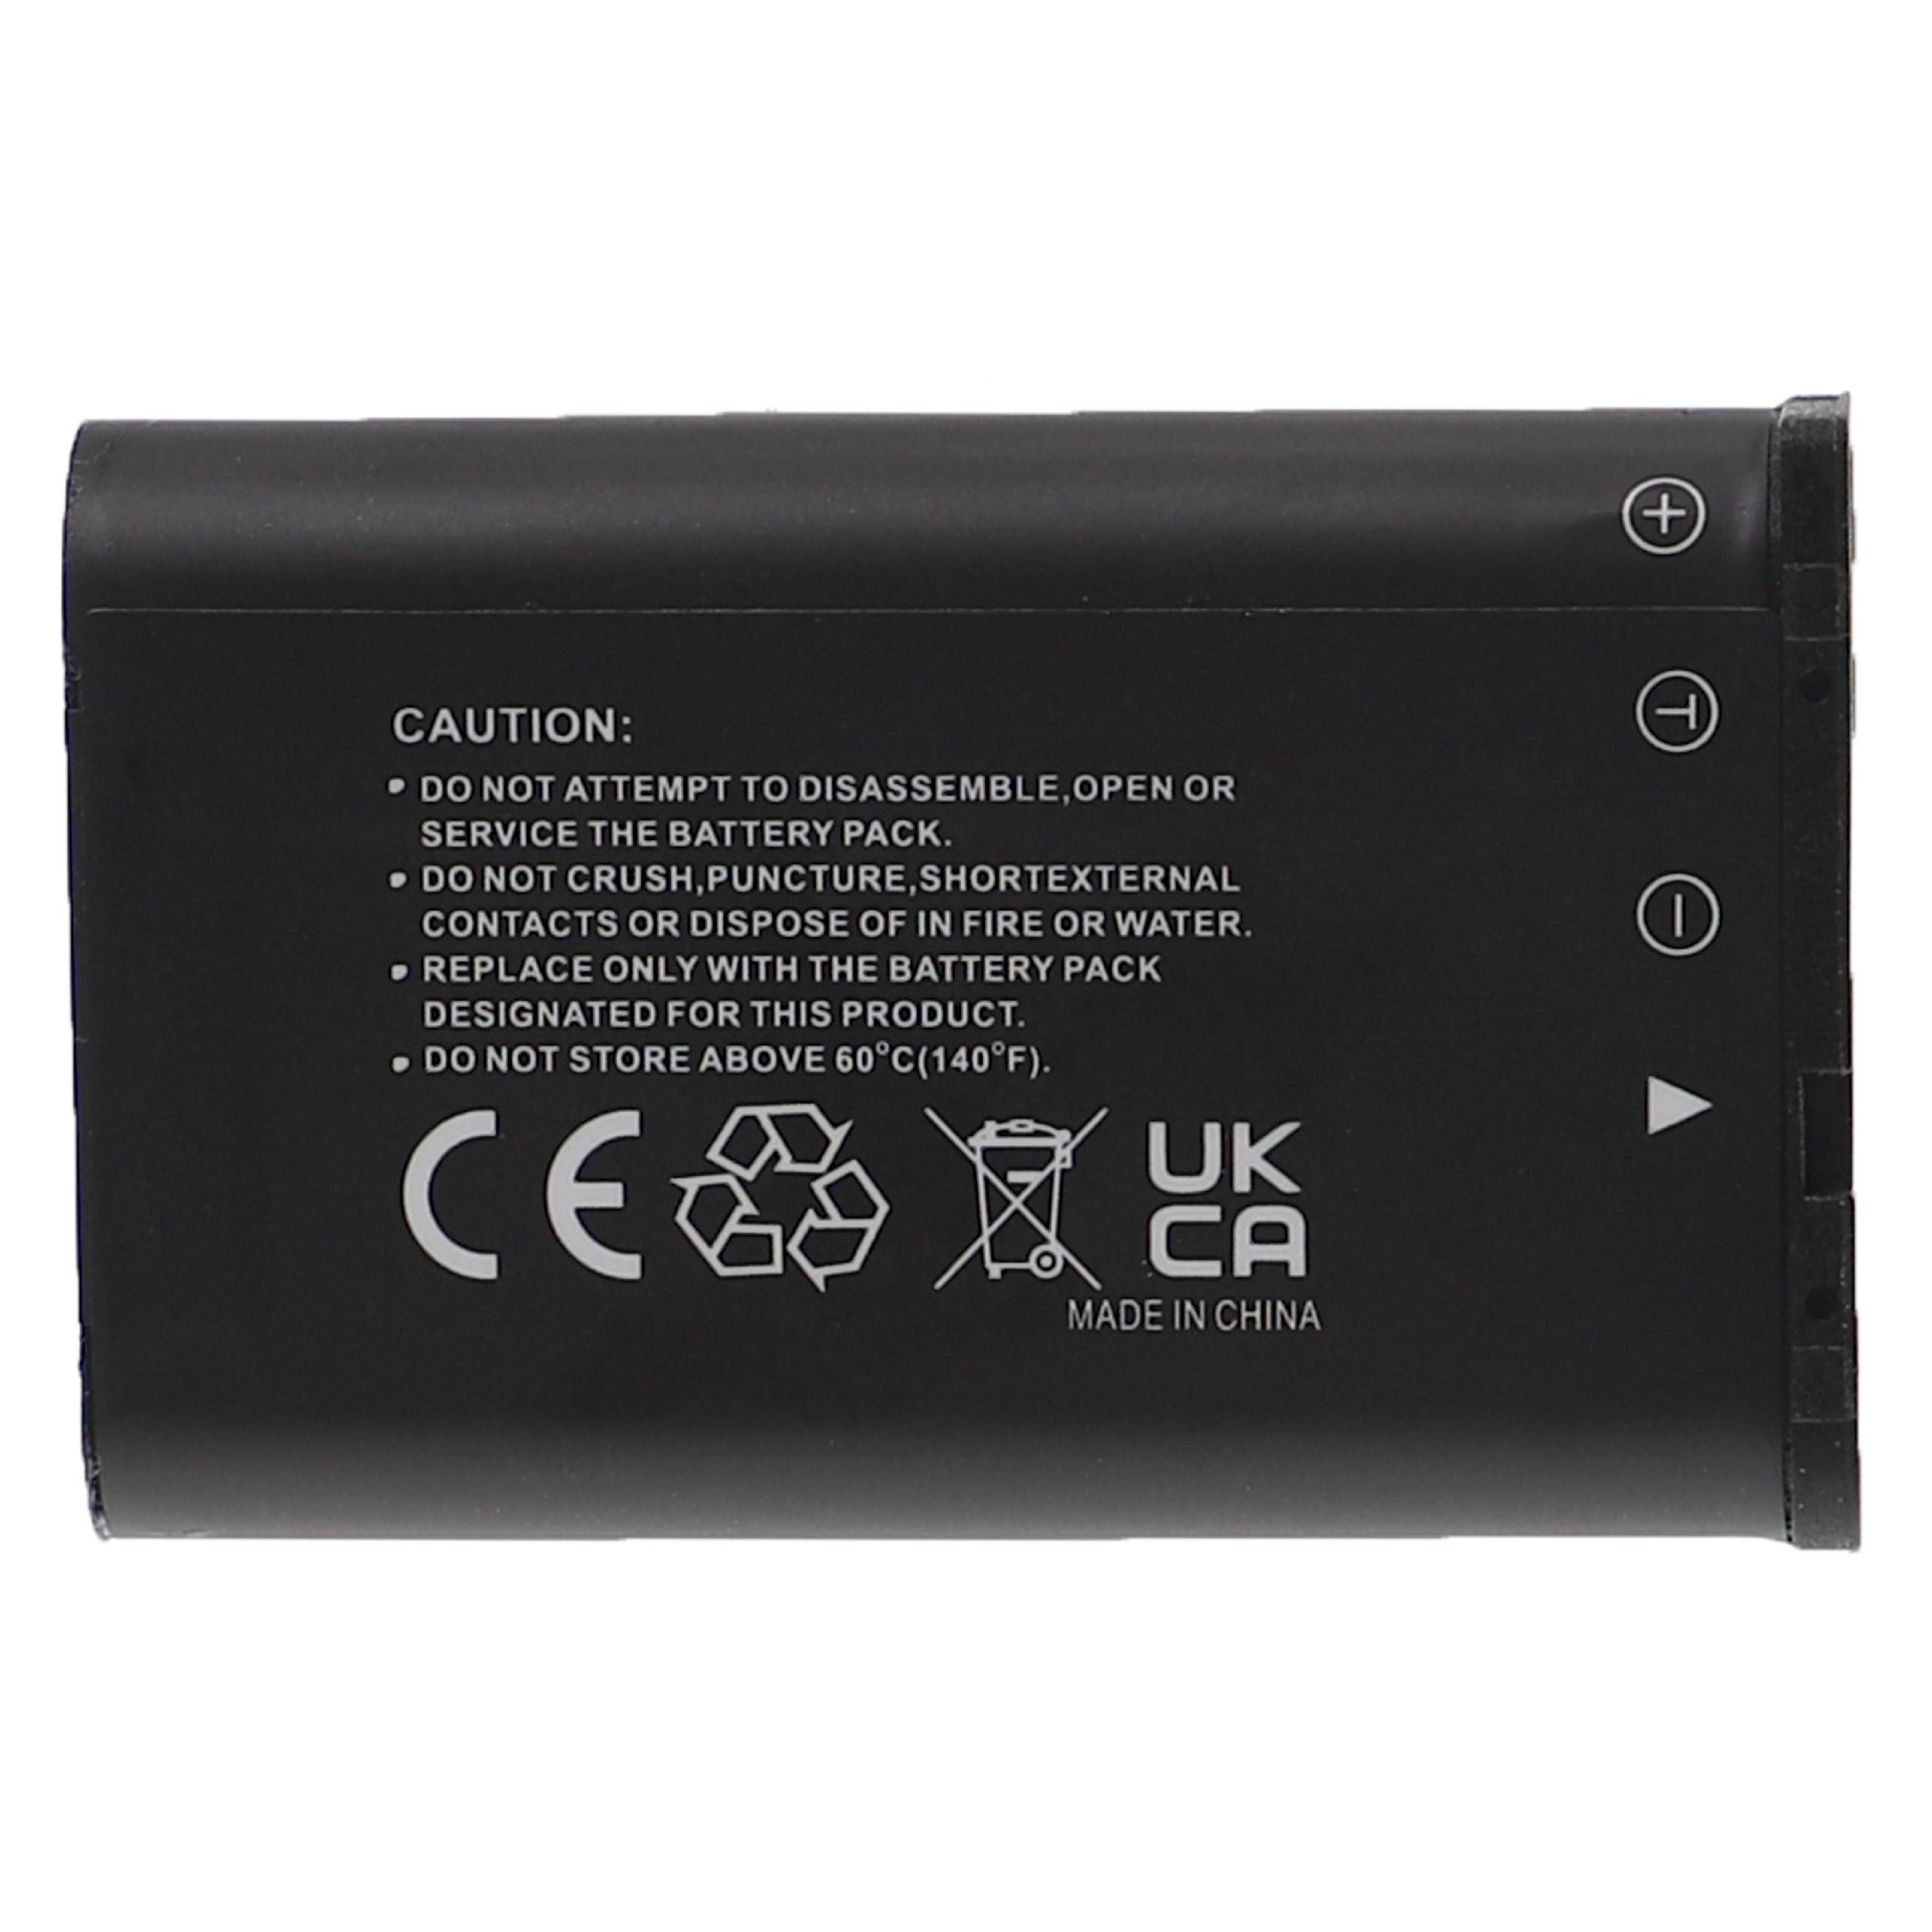 EXTENSILO kompatibel Casio 3.7 Akku - 1800 Kamera, Li-Ion EX-Z2000SR, Exilim Volt, mit EX-Z2000RD, EX-Z2000VT EX-Z2000PK, EX-Z2000BK